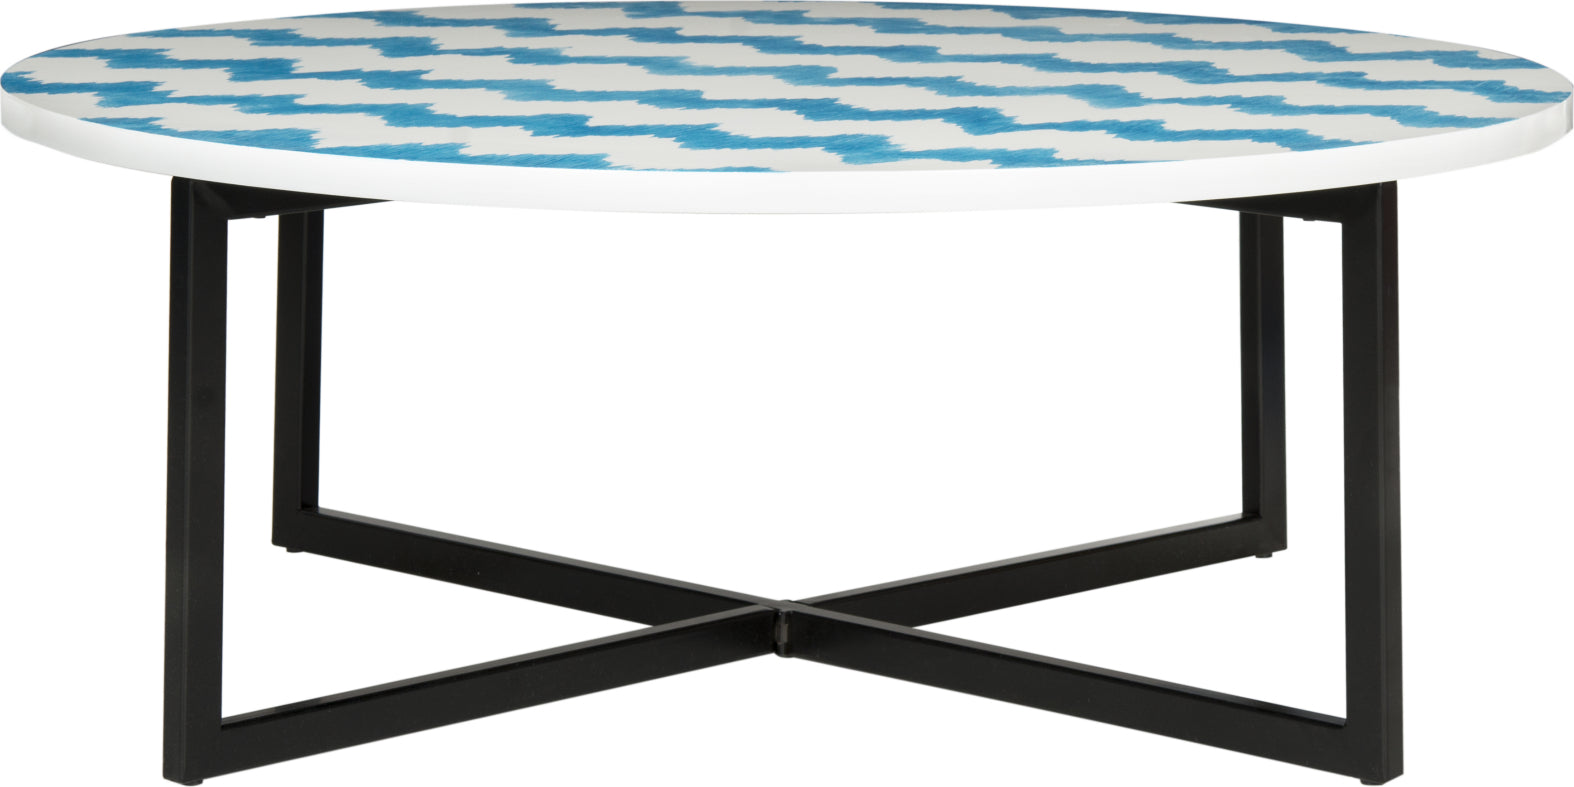 Safavieh Cheyenne Coffee Table Blue and White Furniture main image